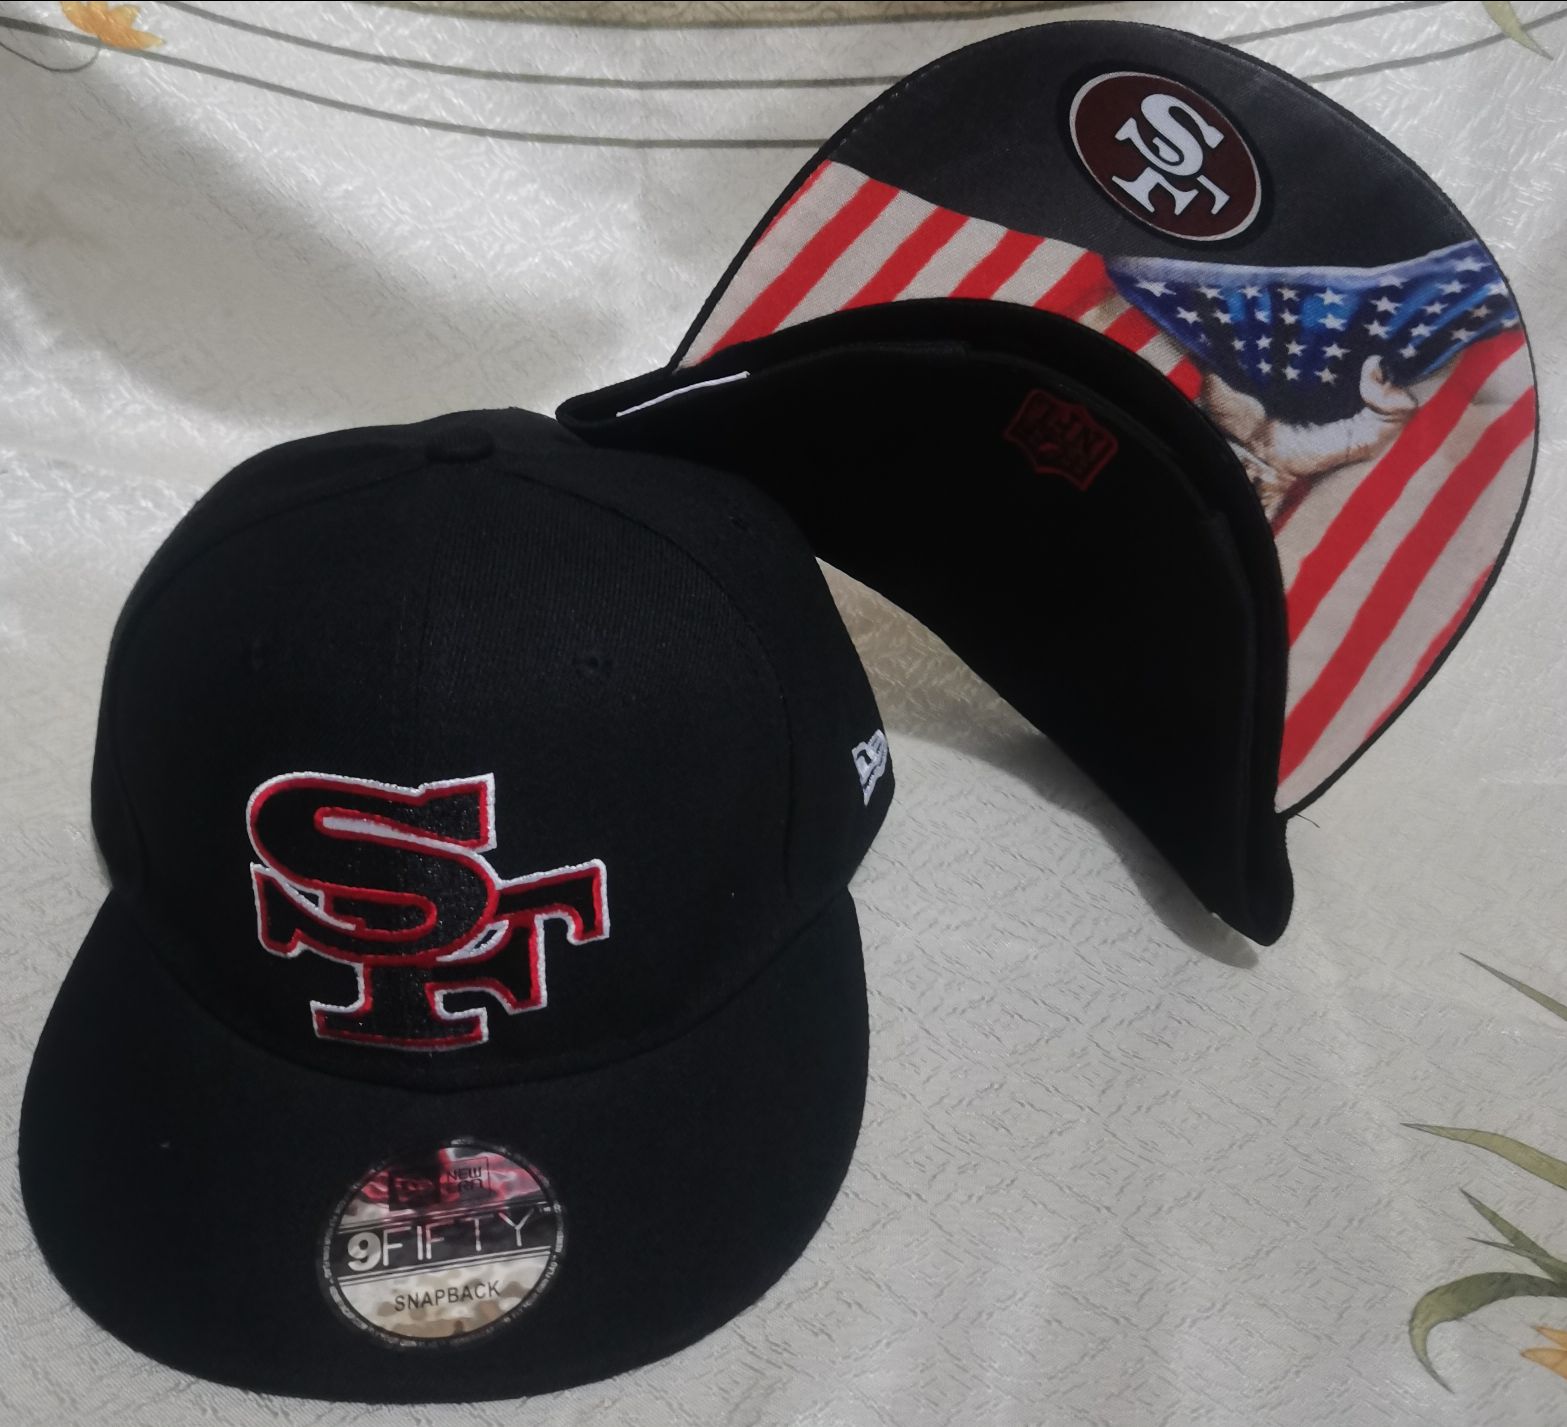 2021 NFL San Francisco 49ers #5 hat